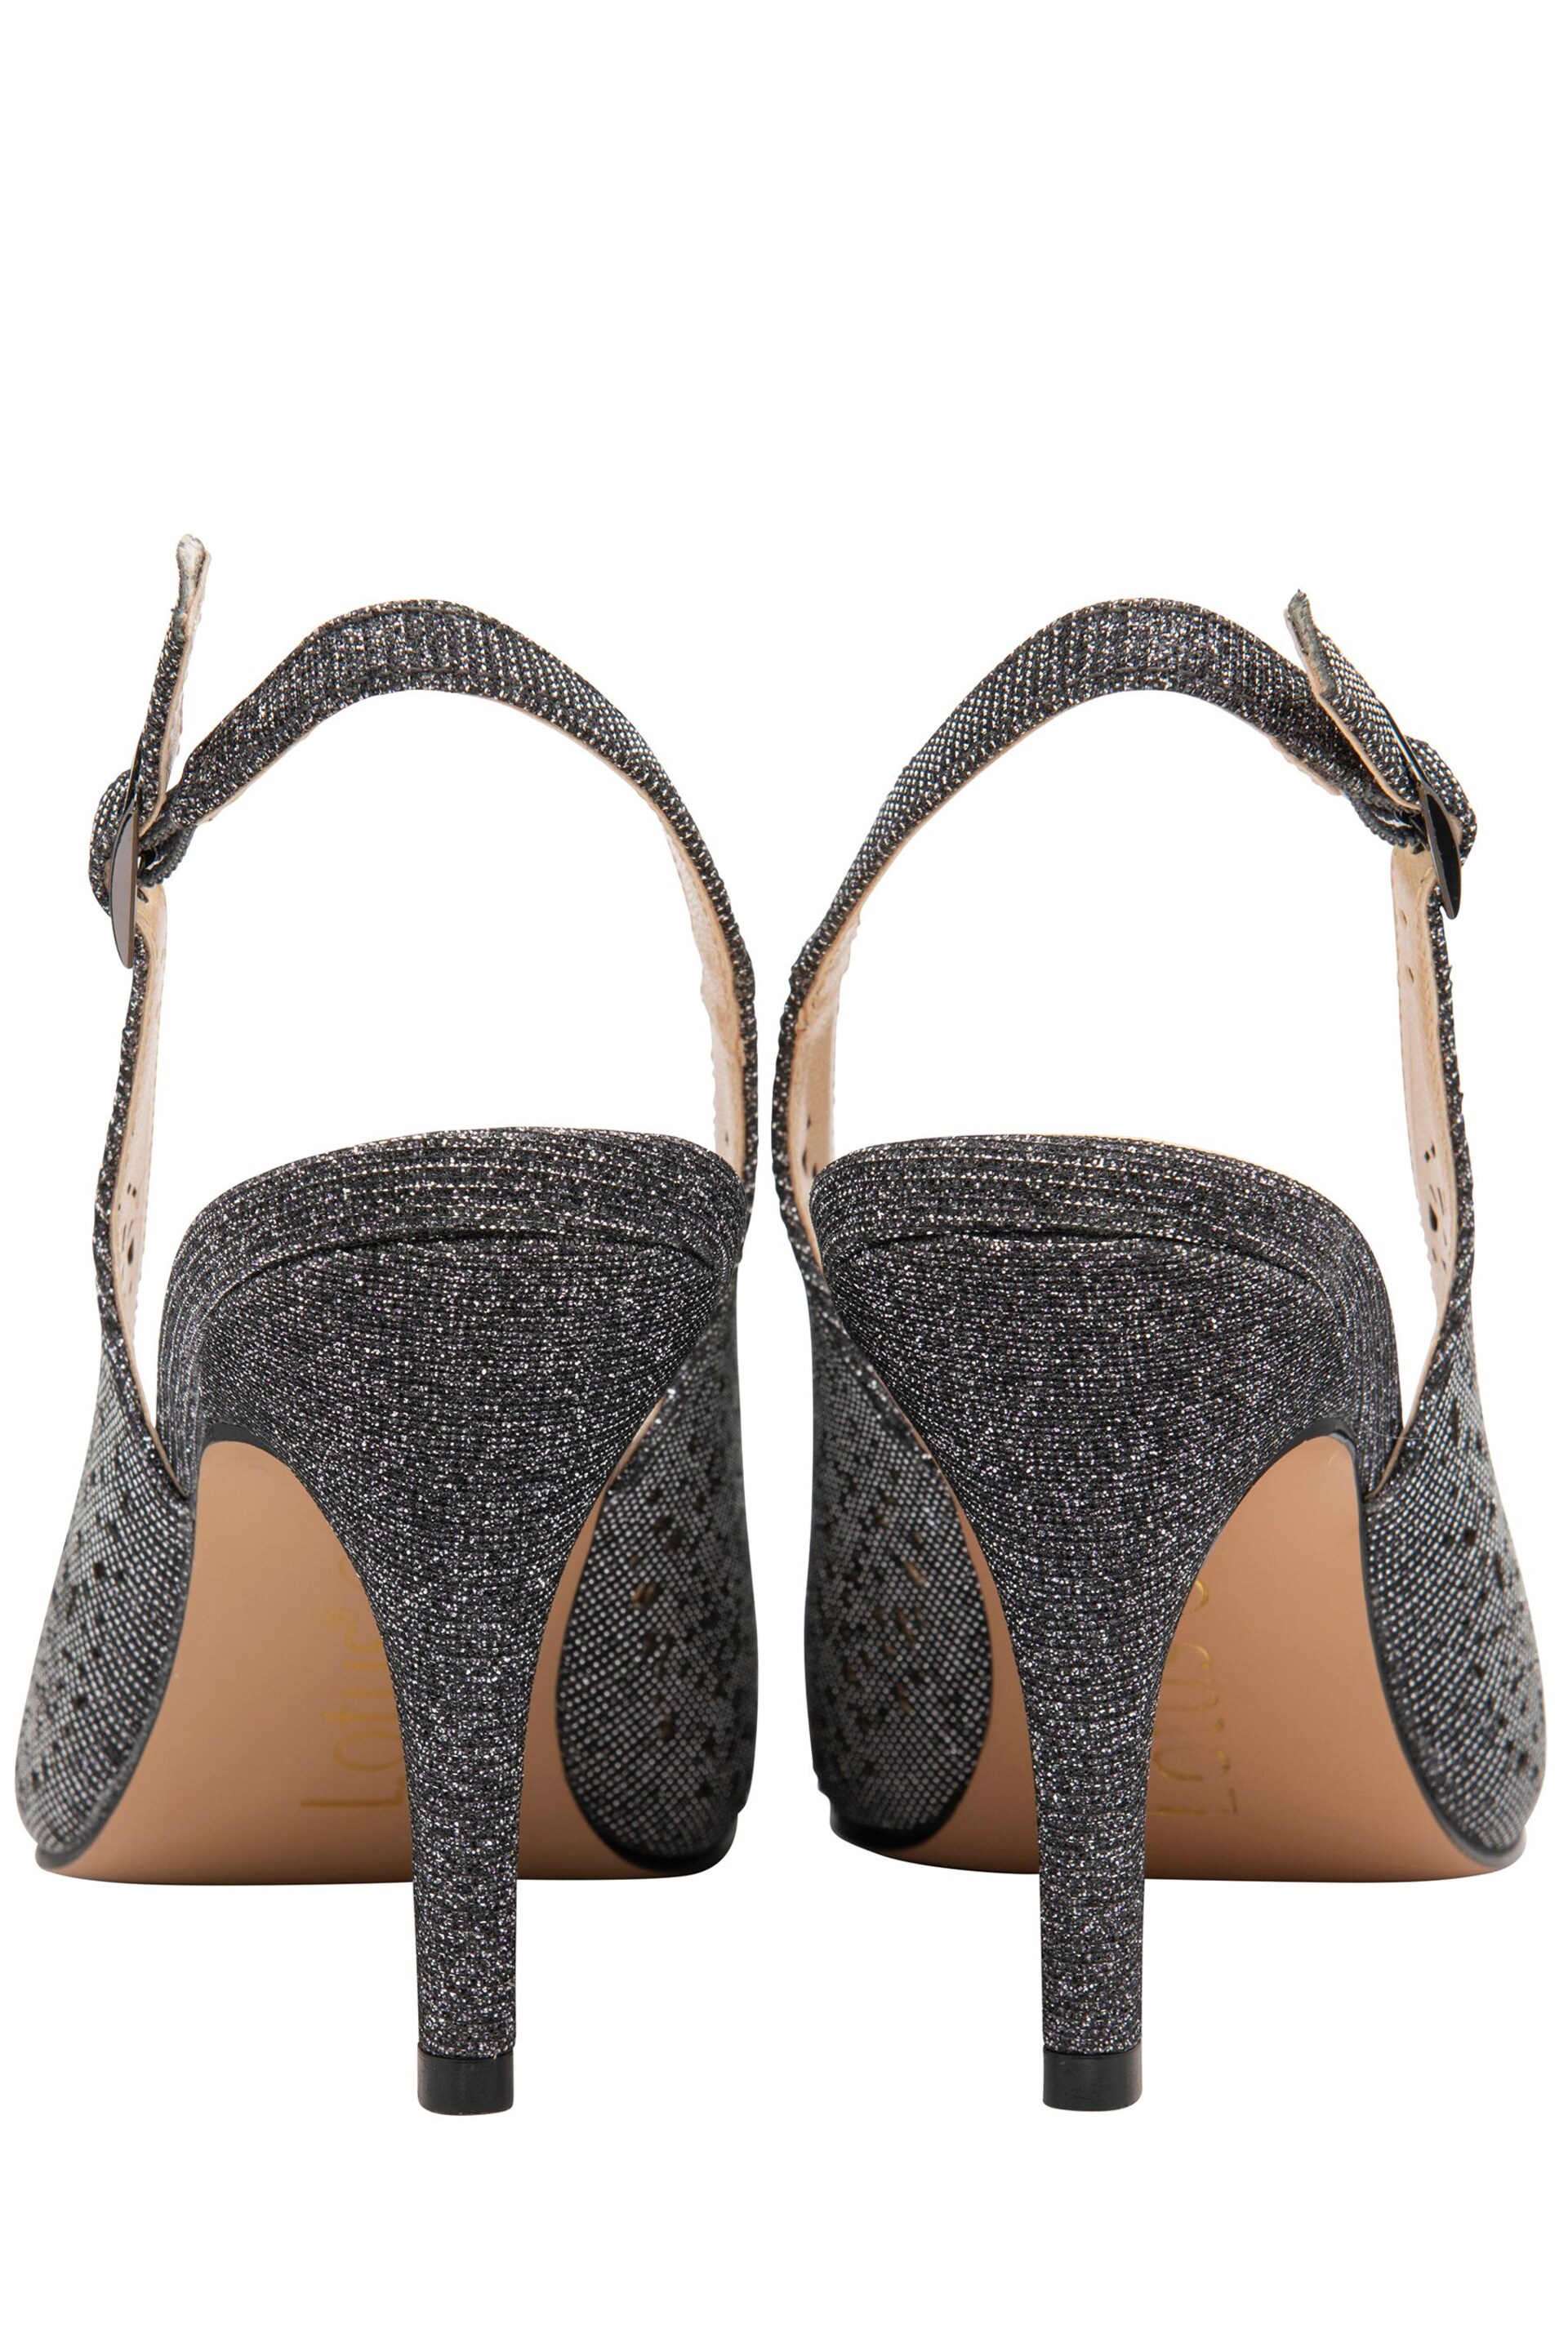 Lotus Grey Slingback Court Shoes - Image 3 of 4